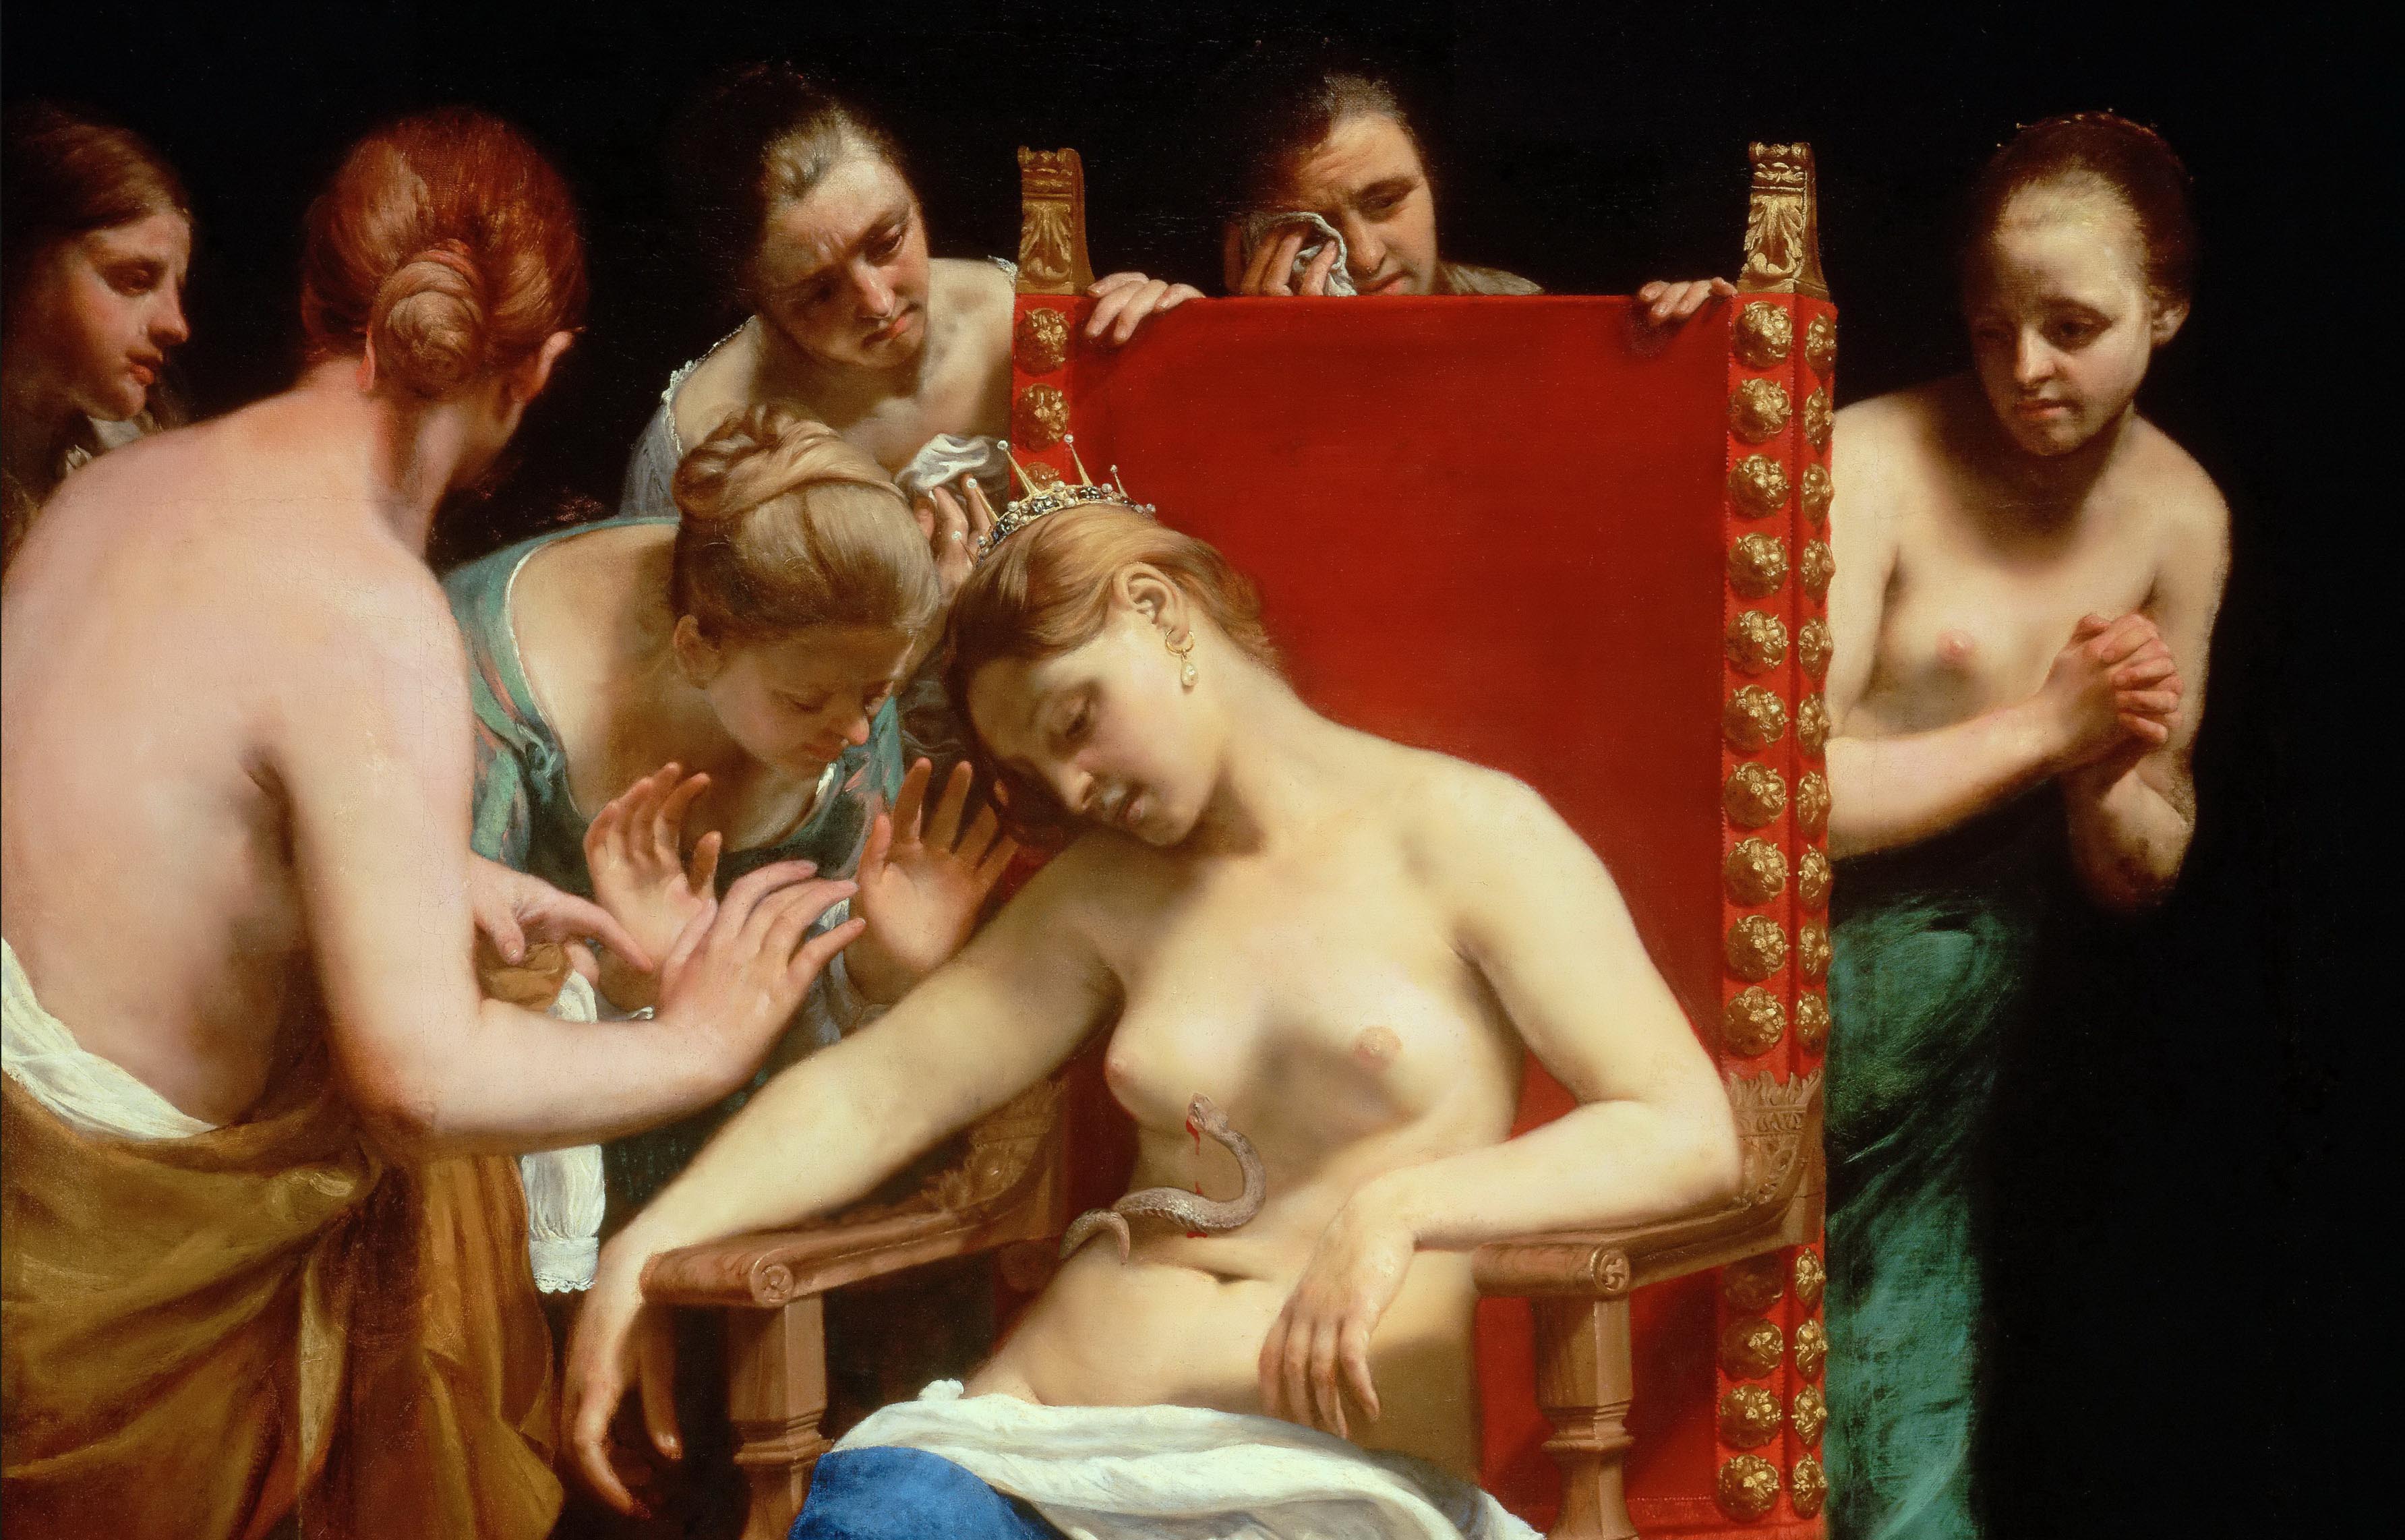 Cleopatra's Death